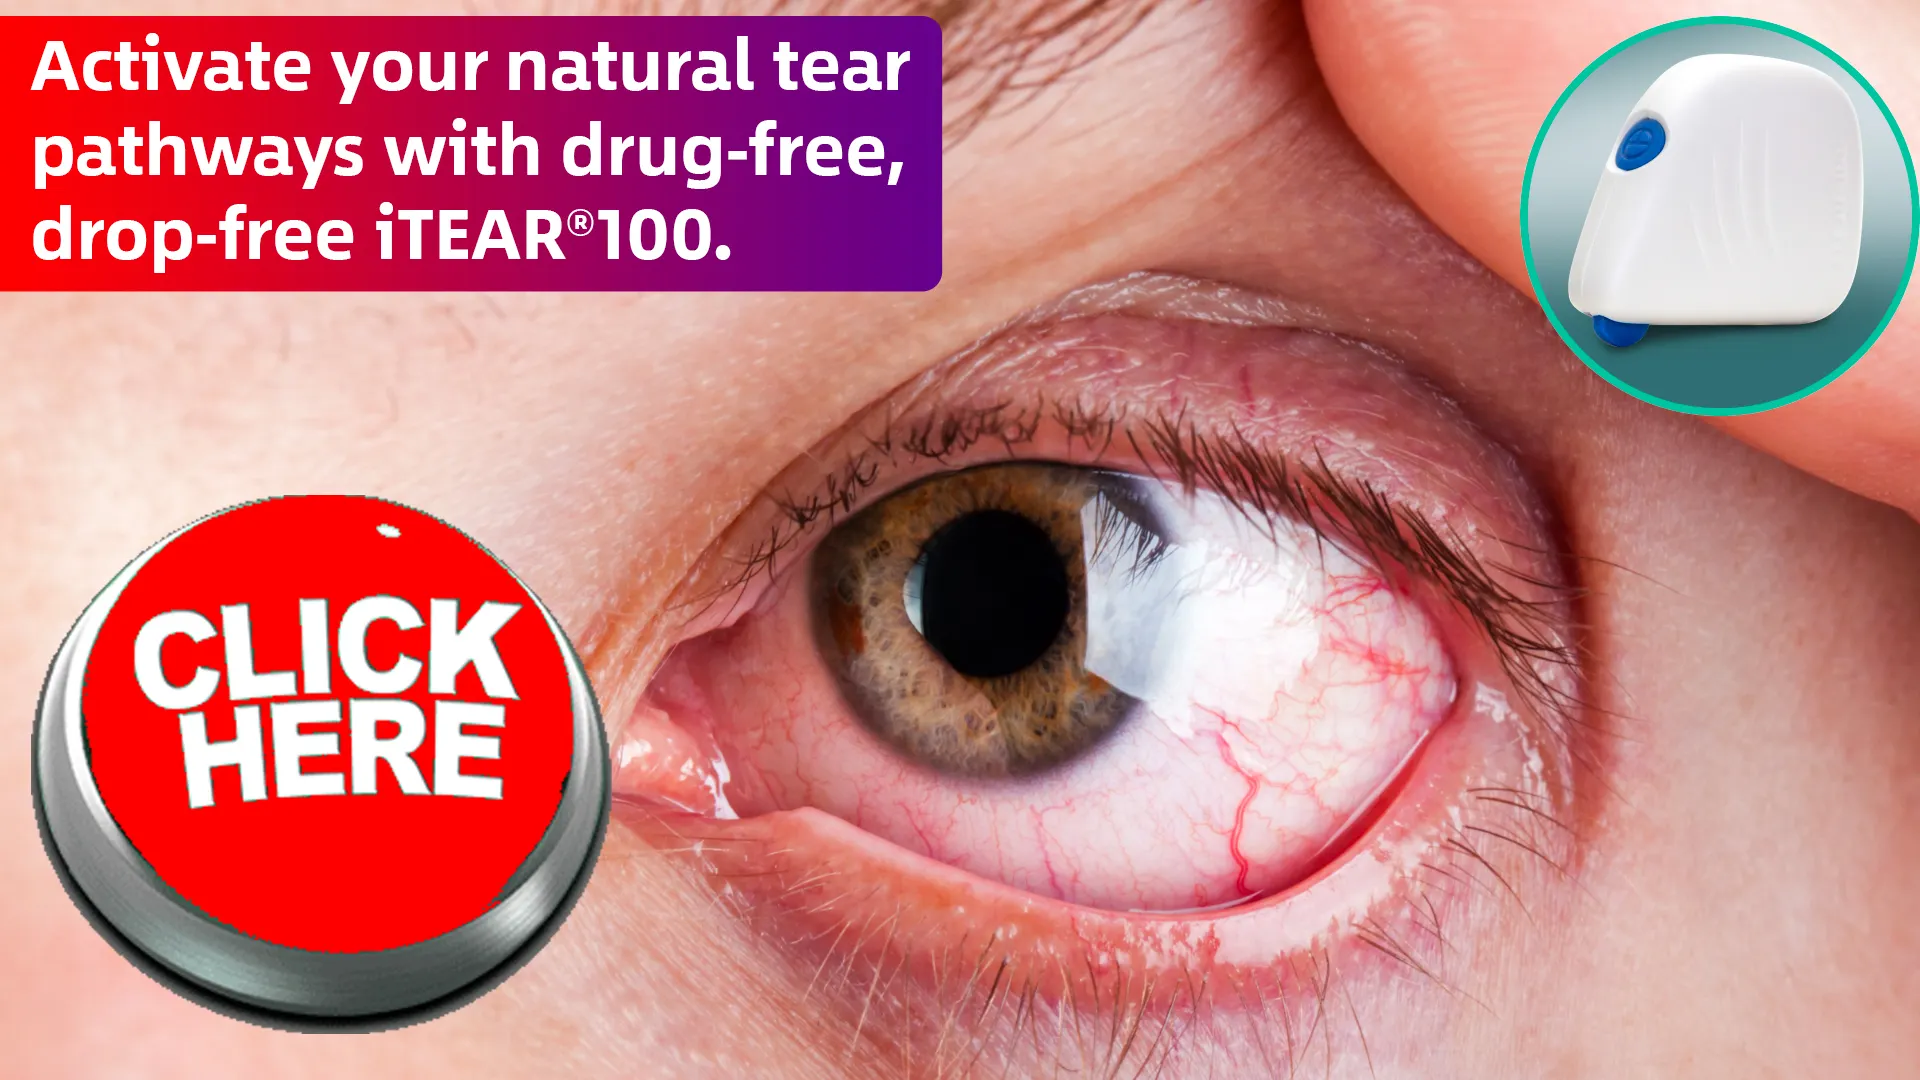 The iTear100 Advantage: Revolutionizing Eye Care